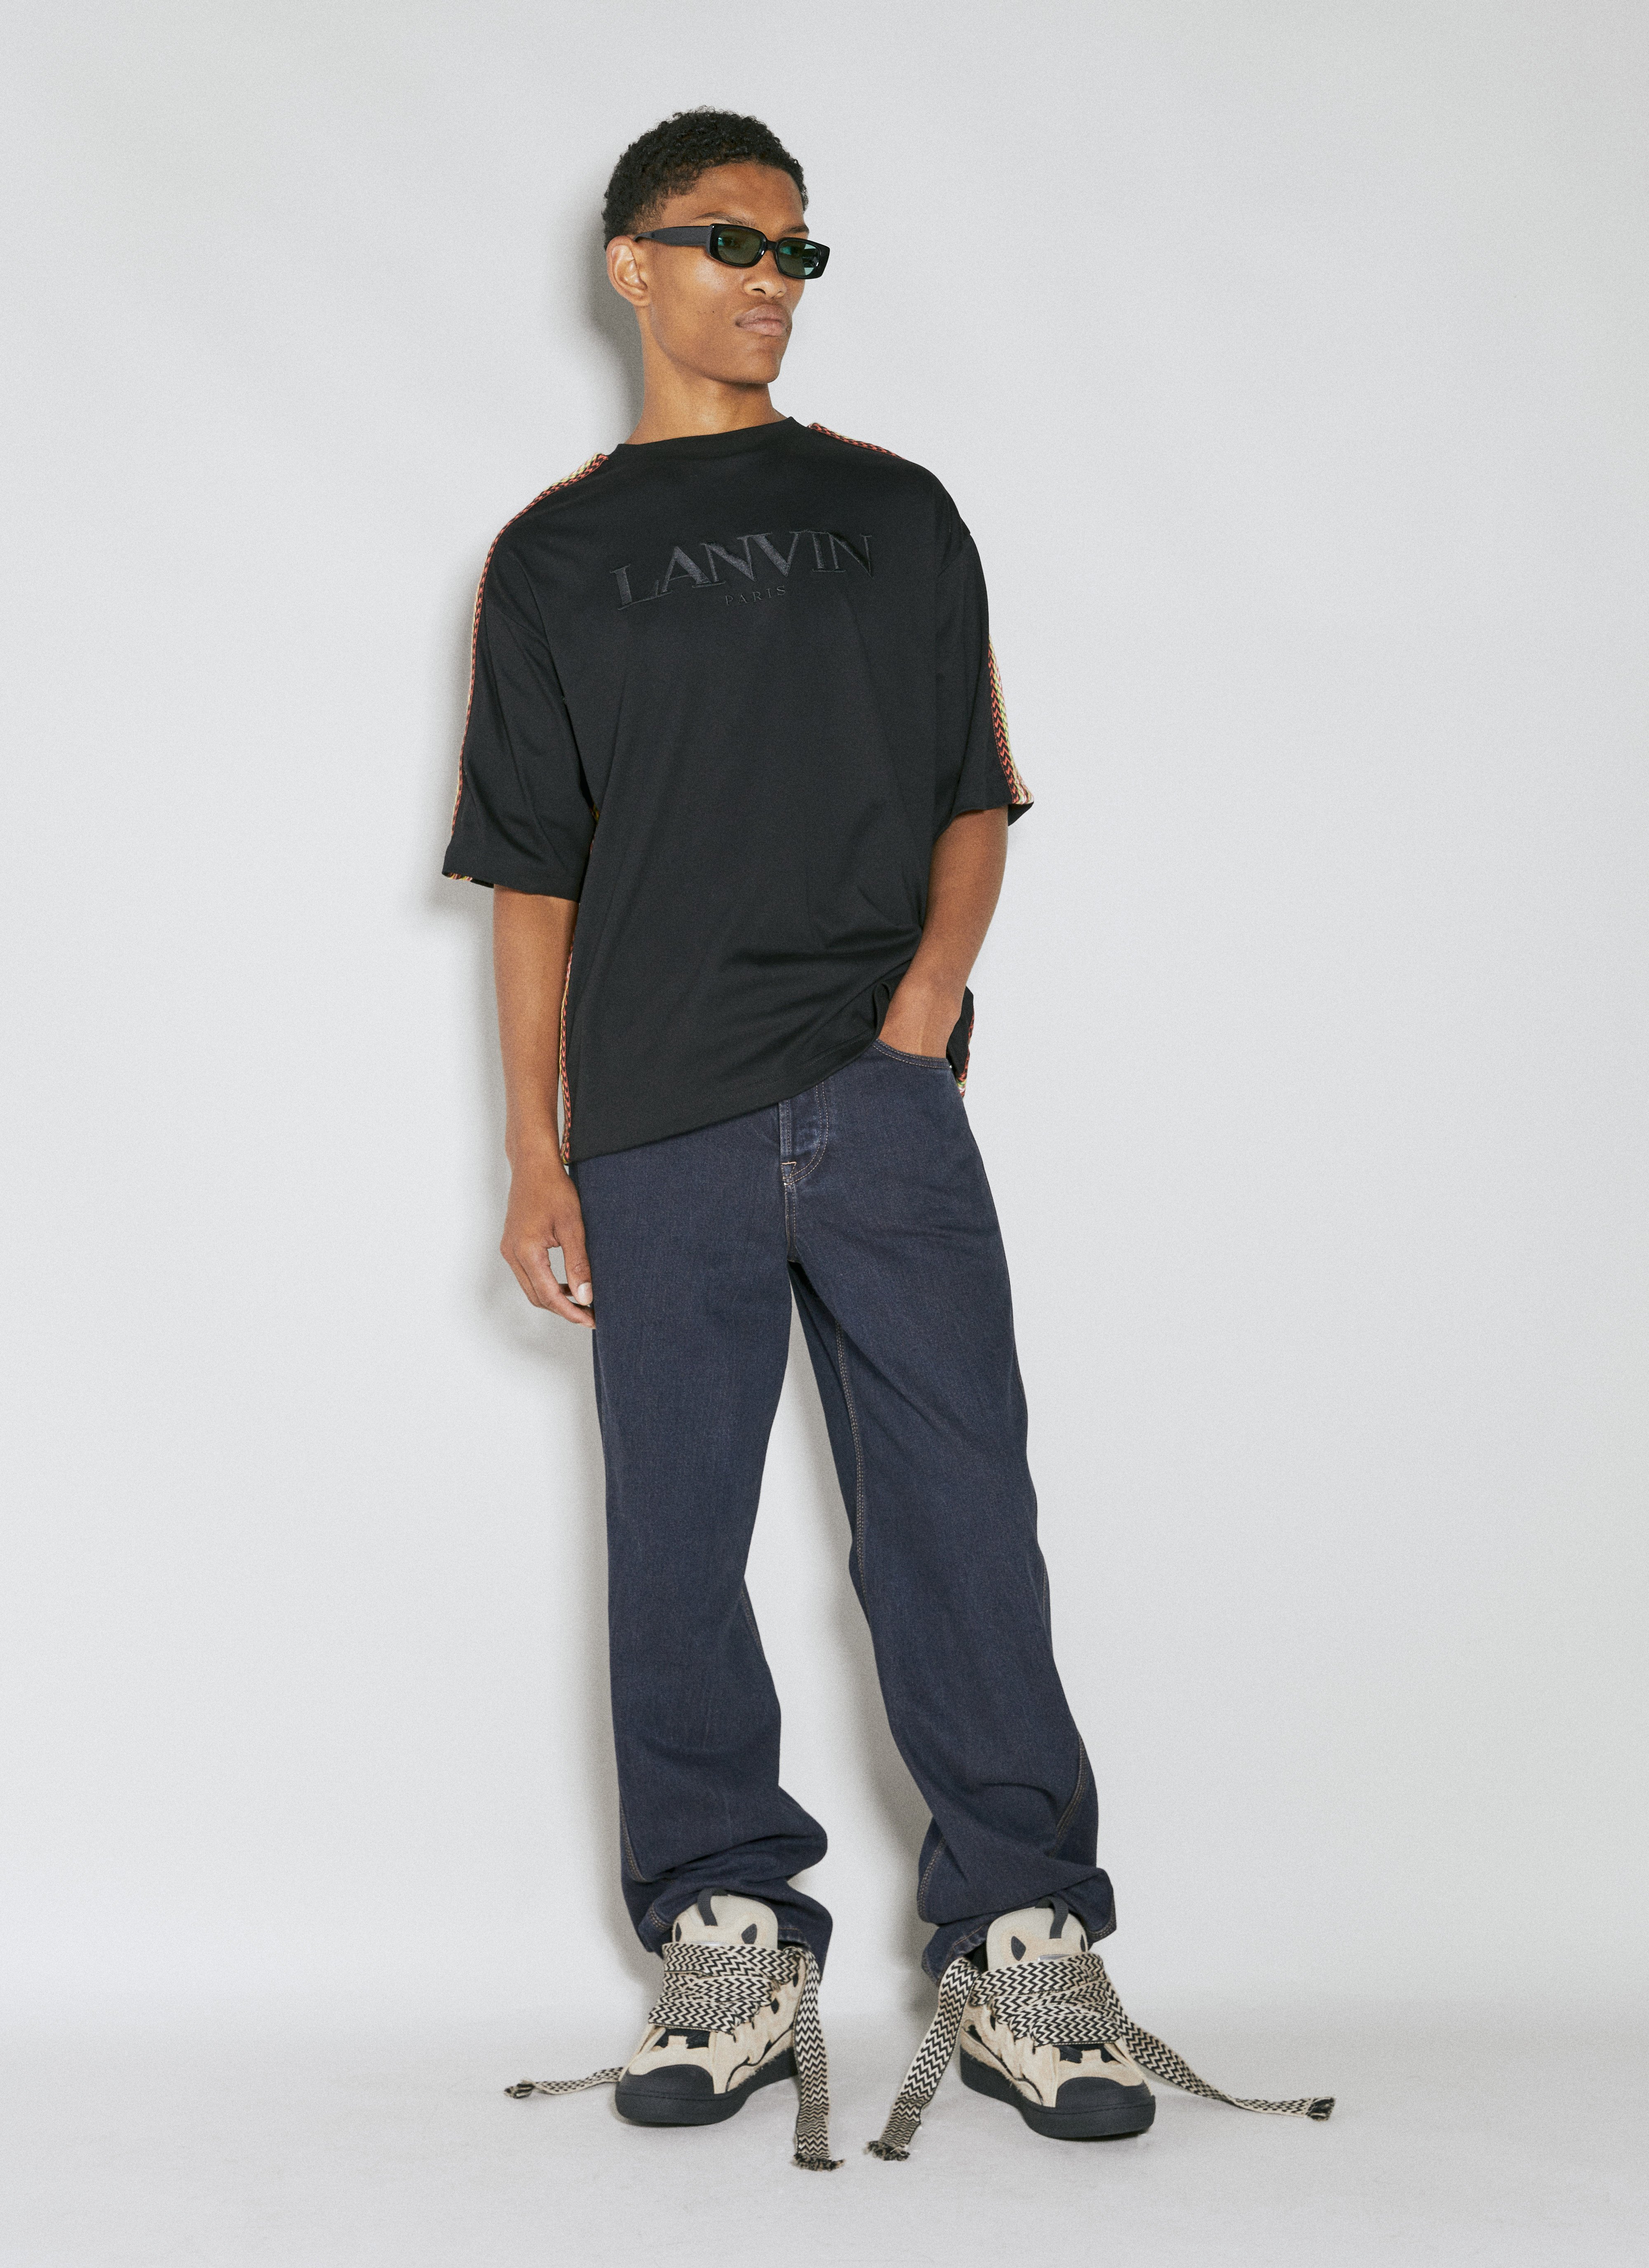 Lanvin Men's Side Curb Oversized T-Shirt in Black